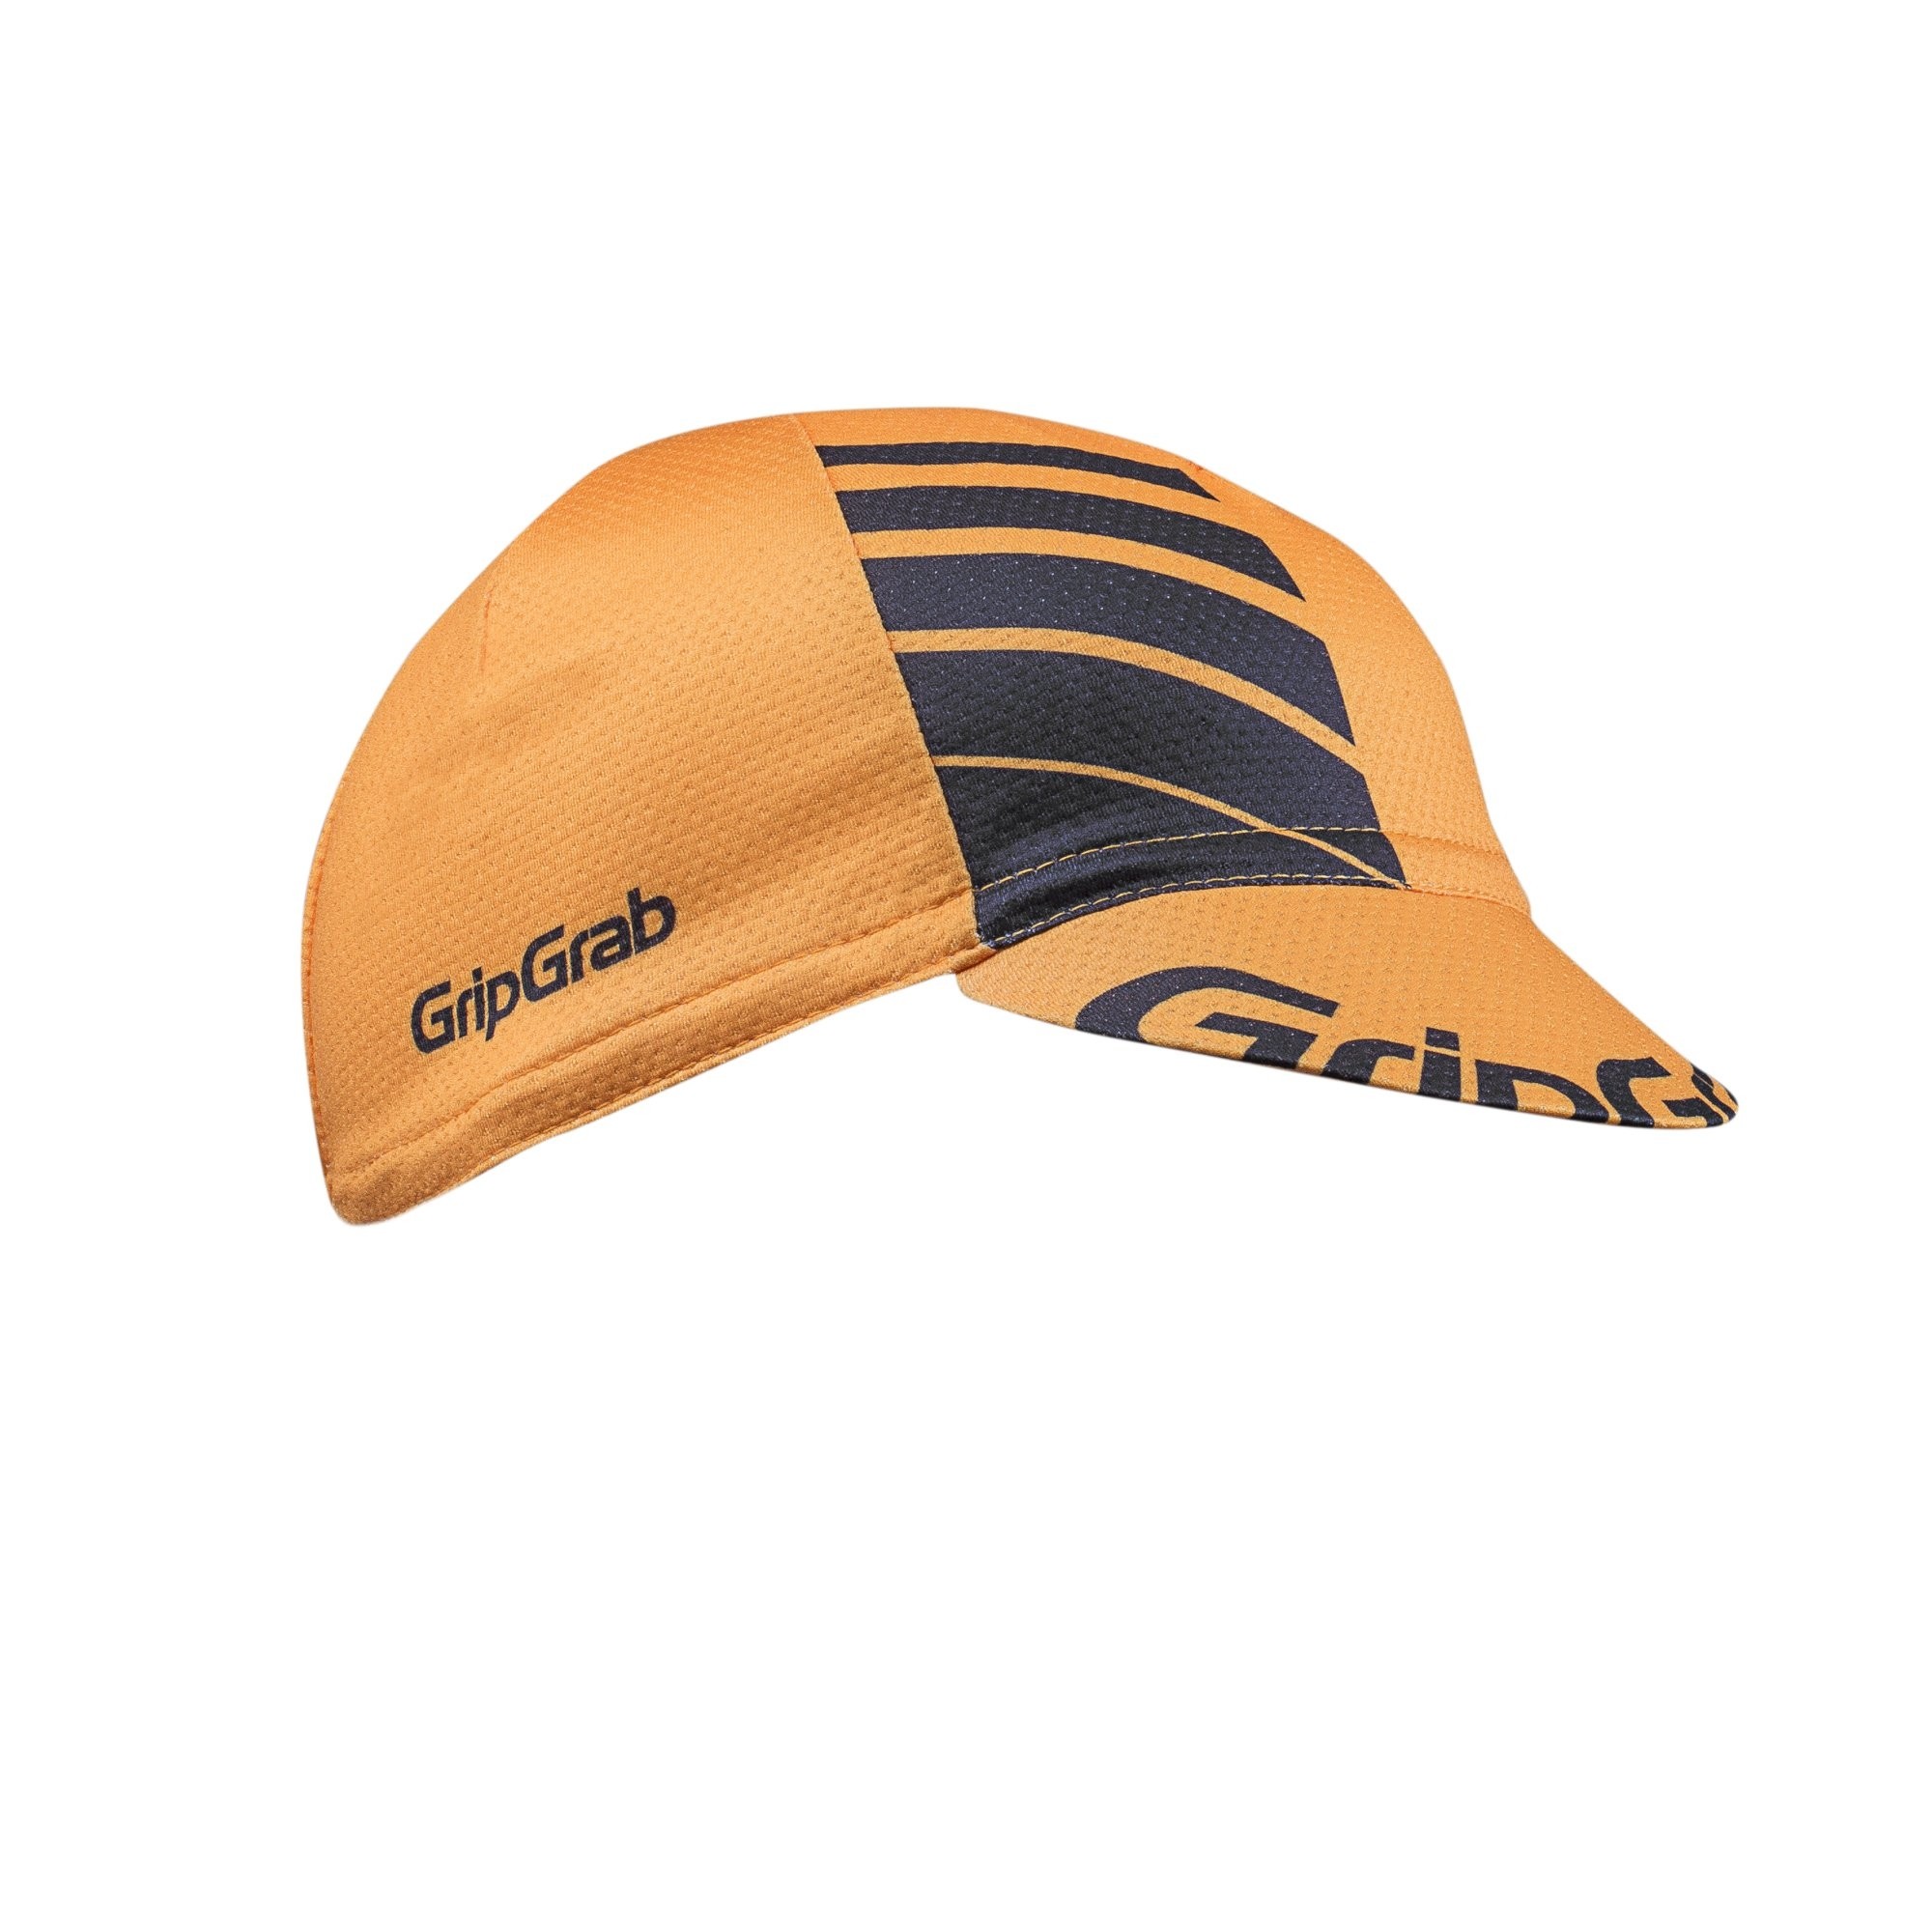 GripGrab lightweight summer fietspet oranje